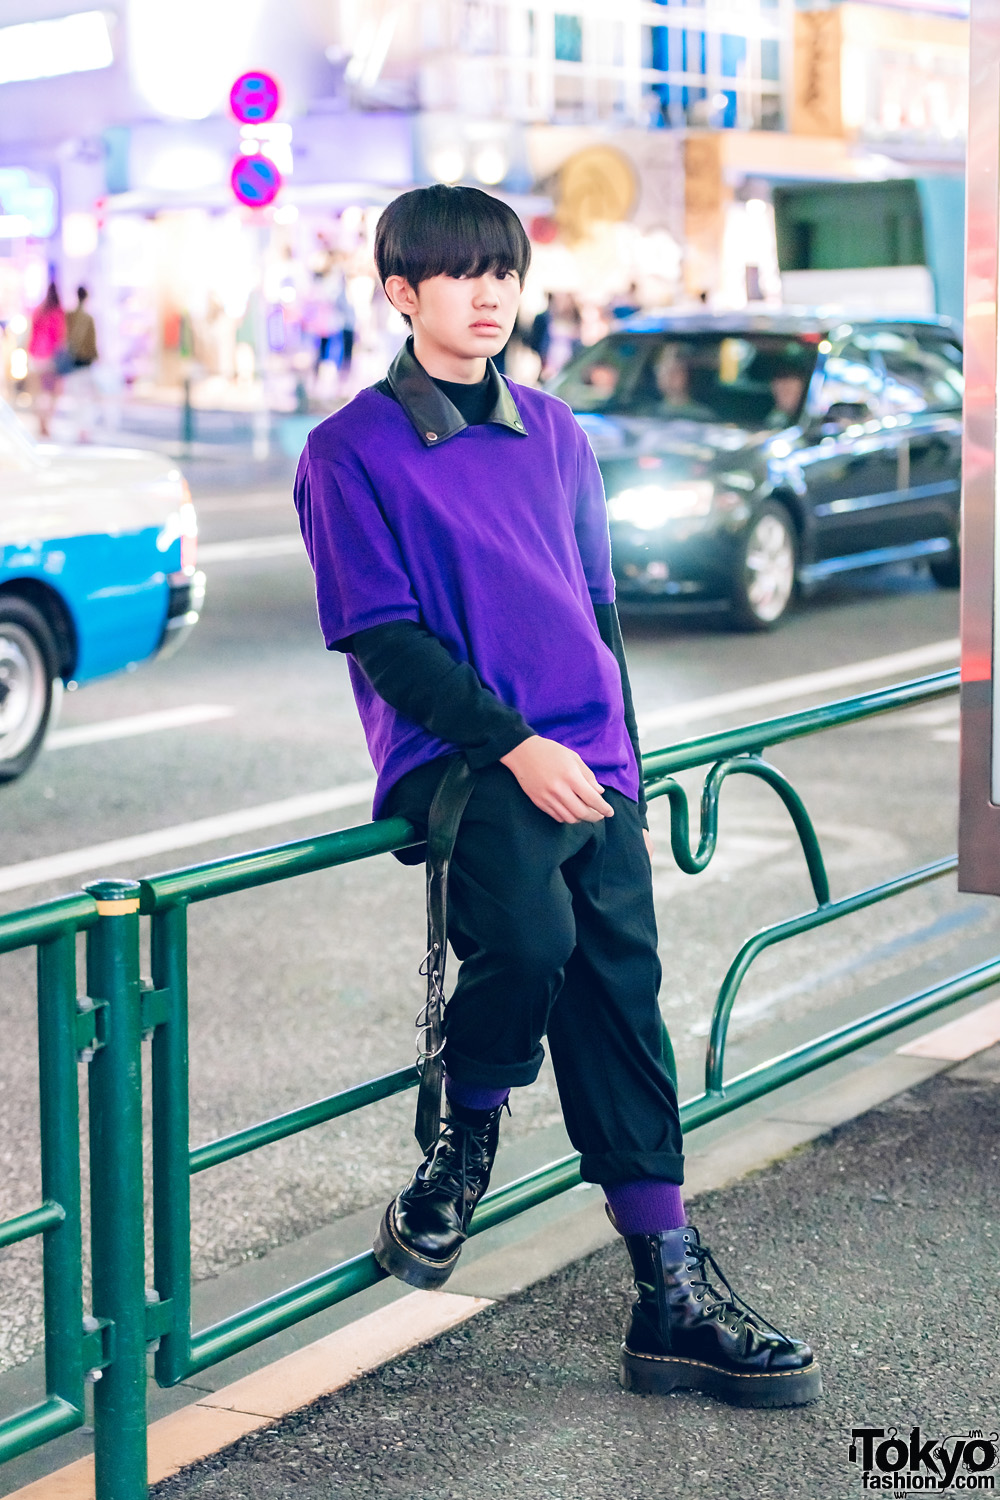 Harajuku Guy in Purple-and-Black Vintage Street Fashion